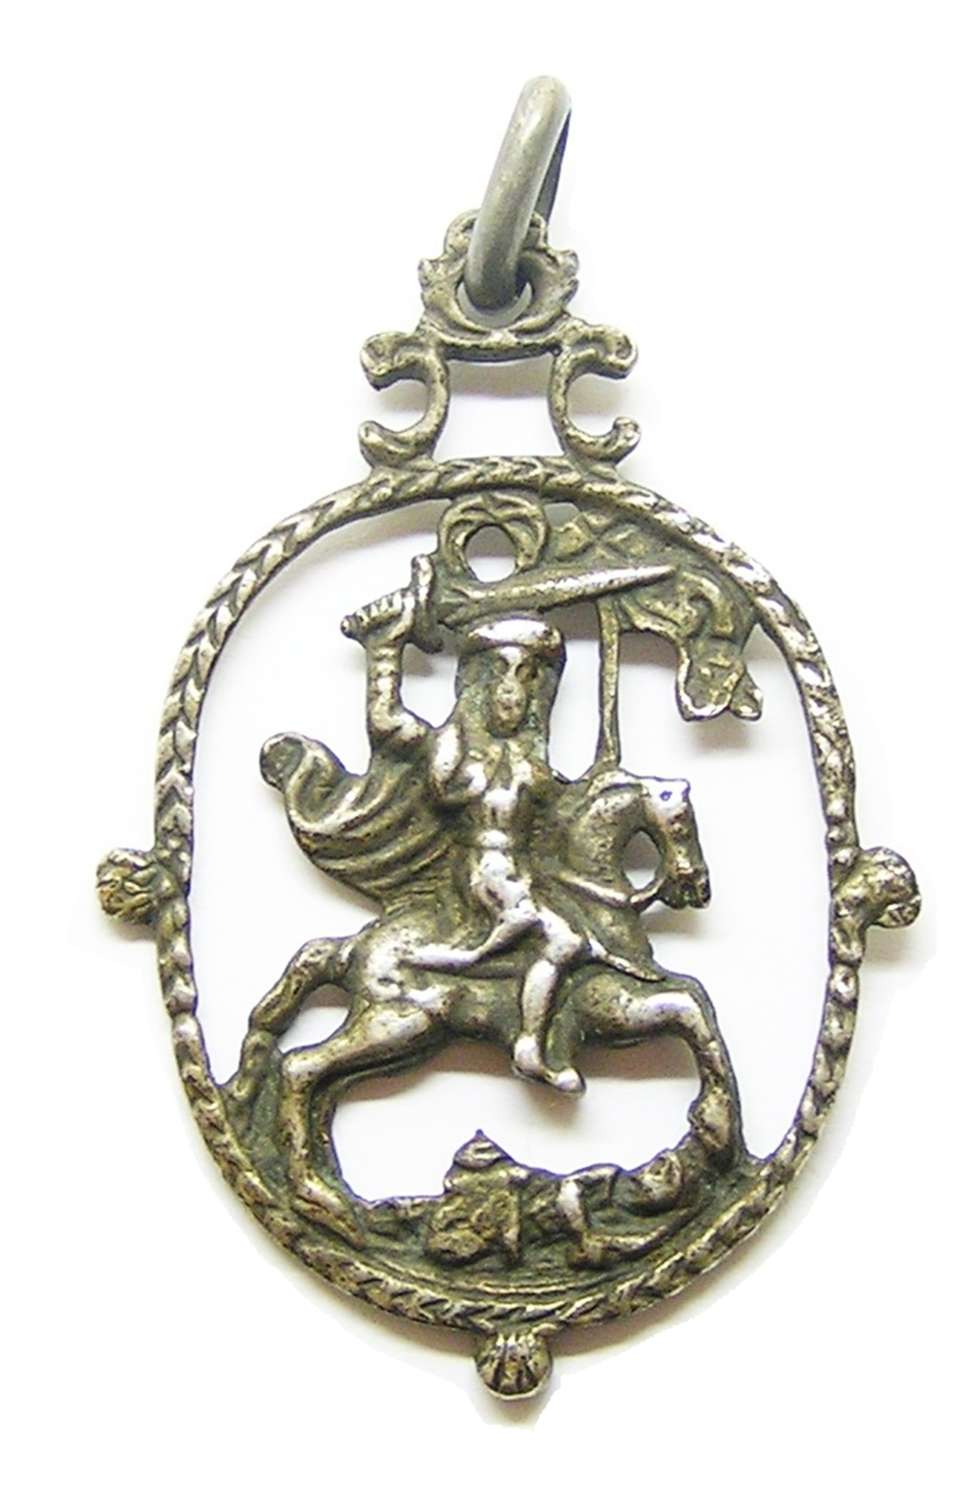 Saint James the Moor-slayer devotional silver pendant